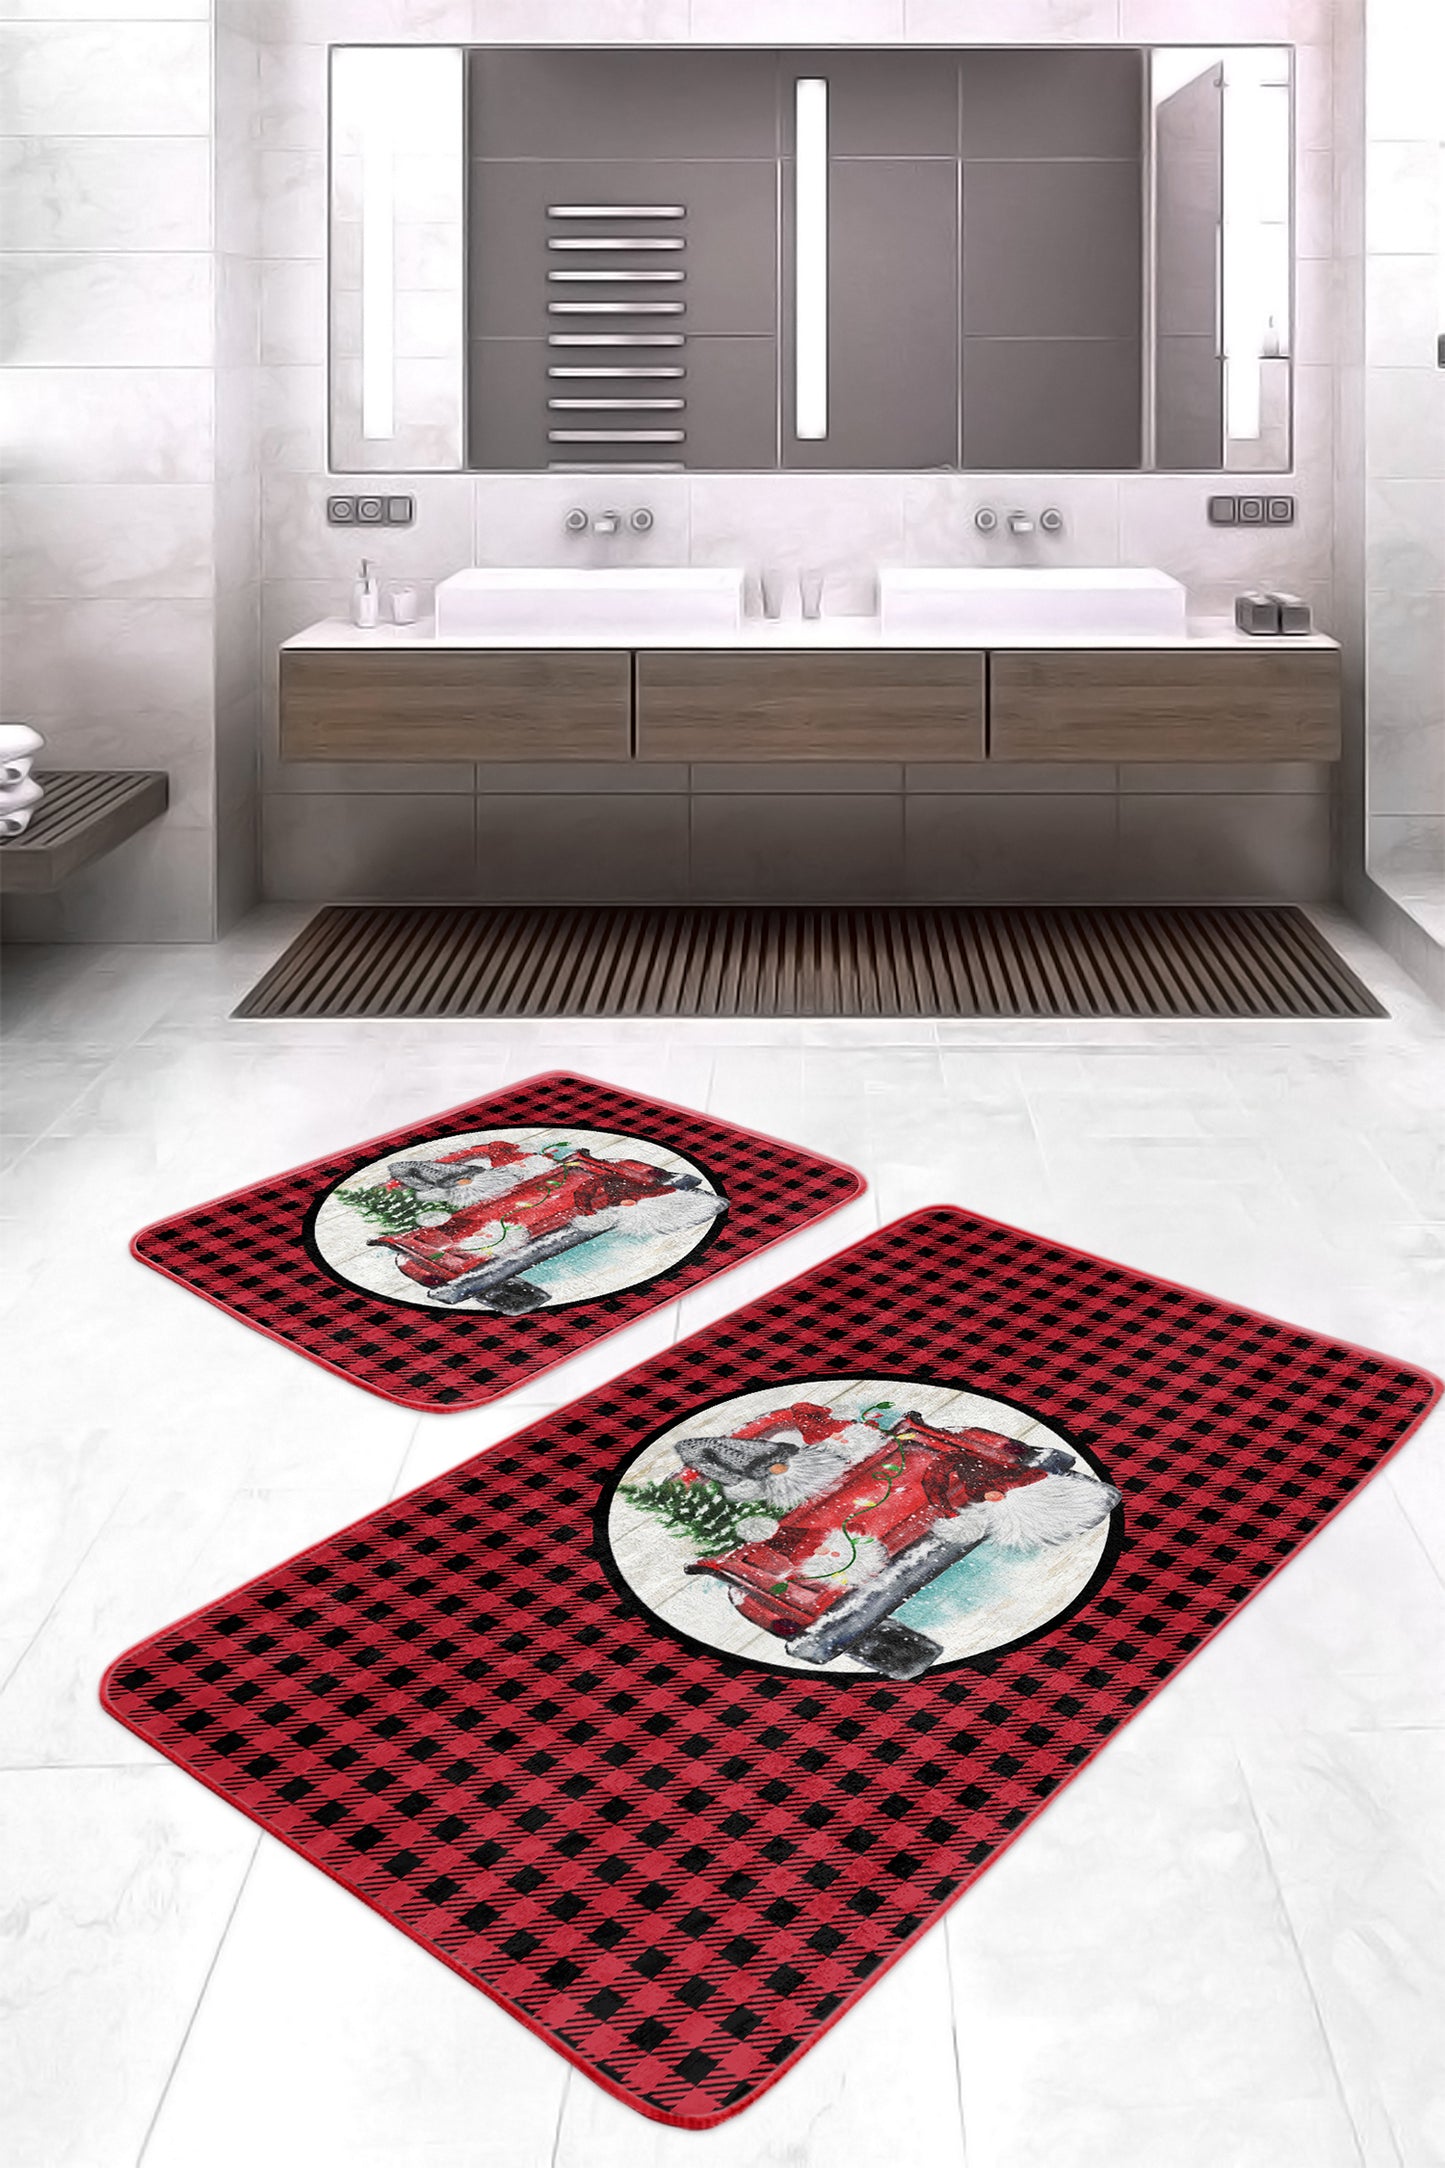 Functional and Stylish Bath Mat Set with Red Christmas Decor Craftsmanship